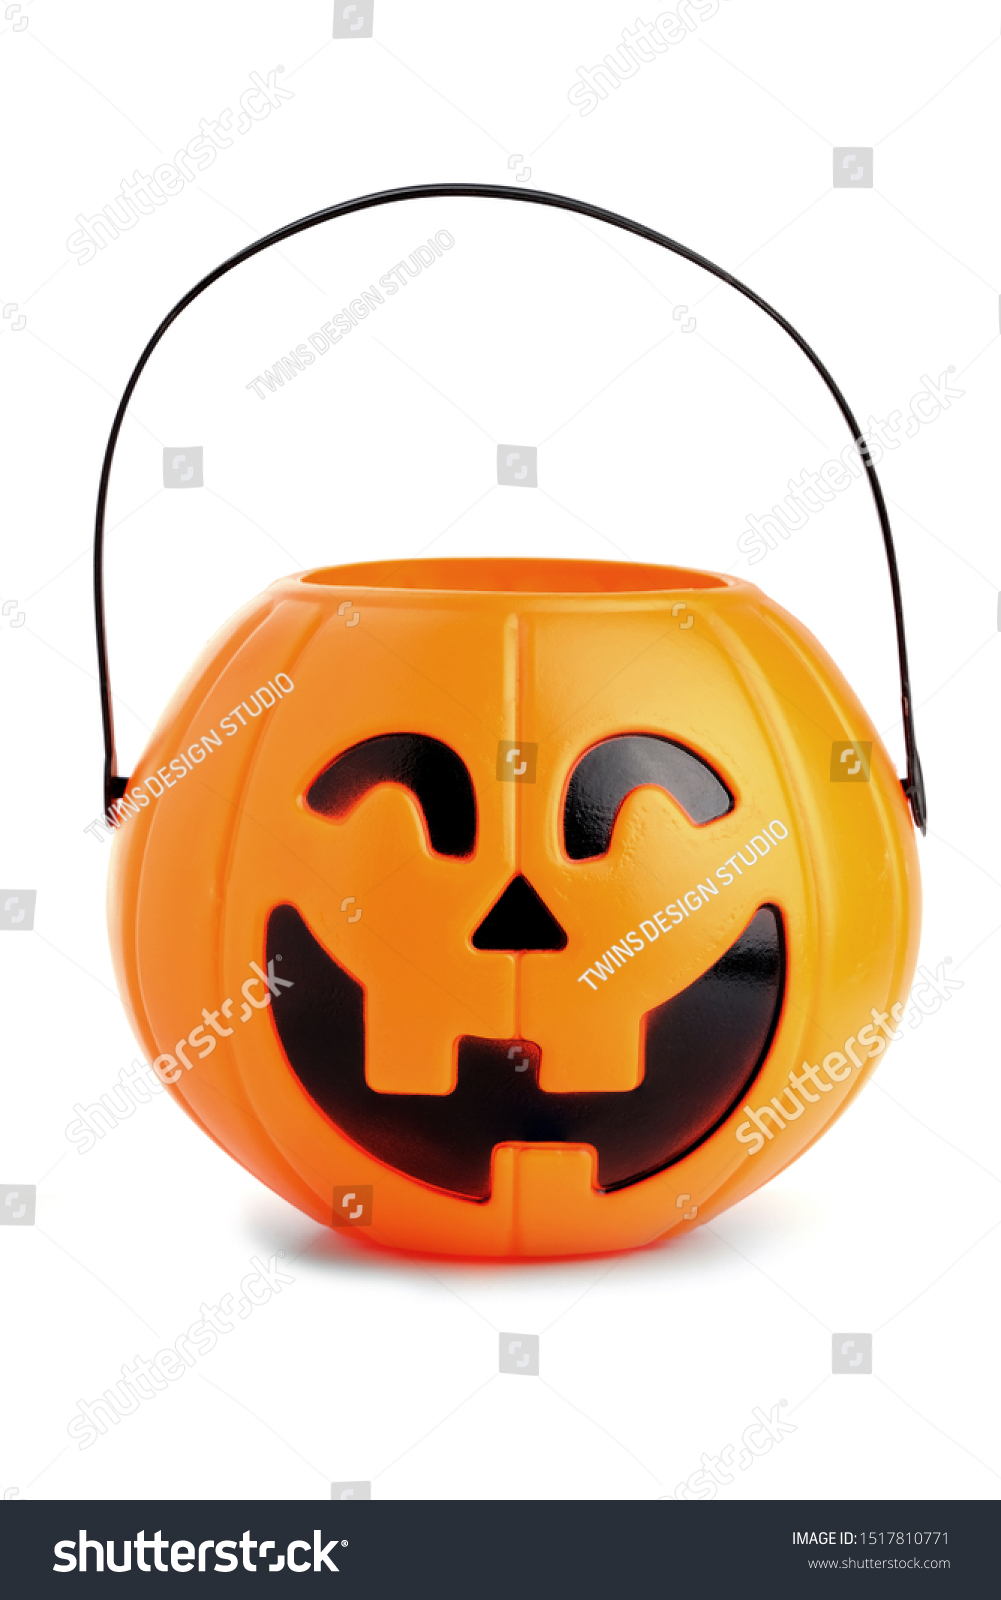 Jack-o'-lantern, jack o'lantern, pumpkin toy basket for Halloween seasons.plastic pumpkin, trick or treat, seasonal celebration. #1517810771